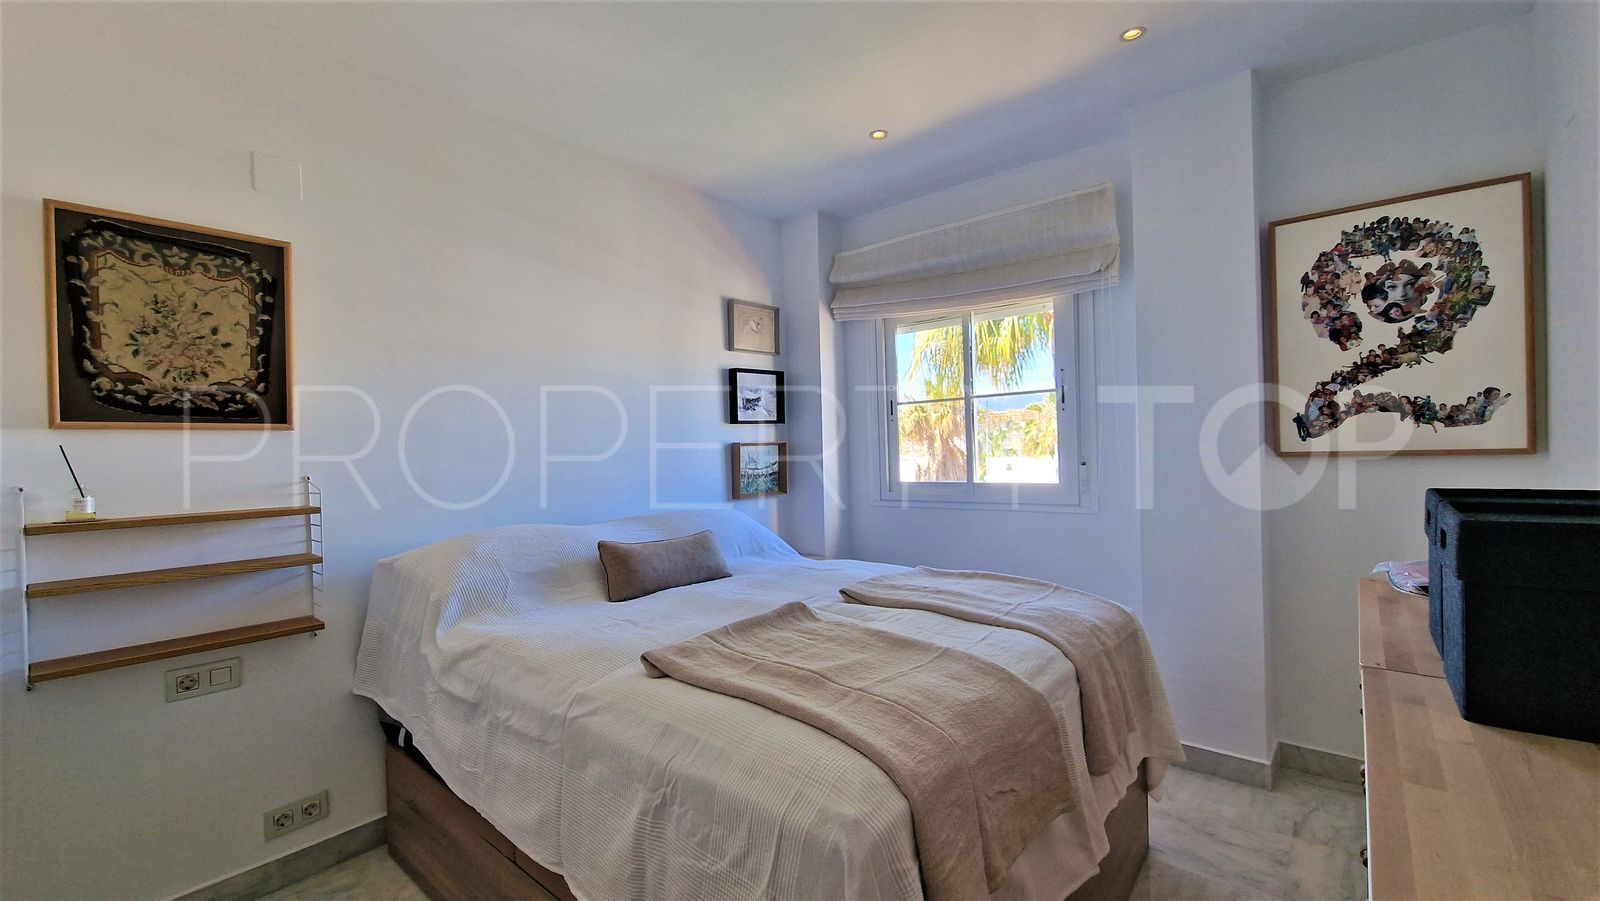 4 bedrooms duplex penthouse in San Pedro de Alcantara for sale